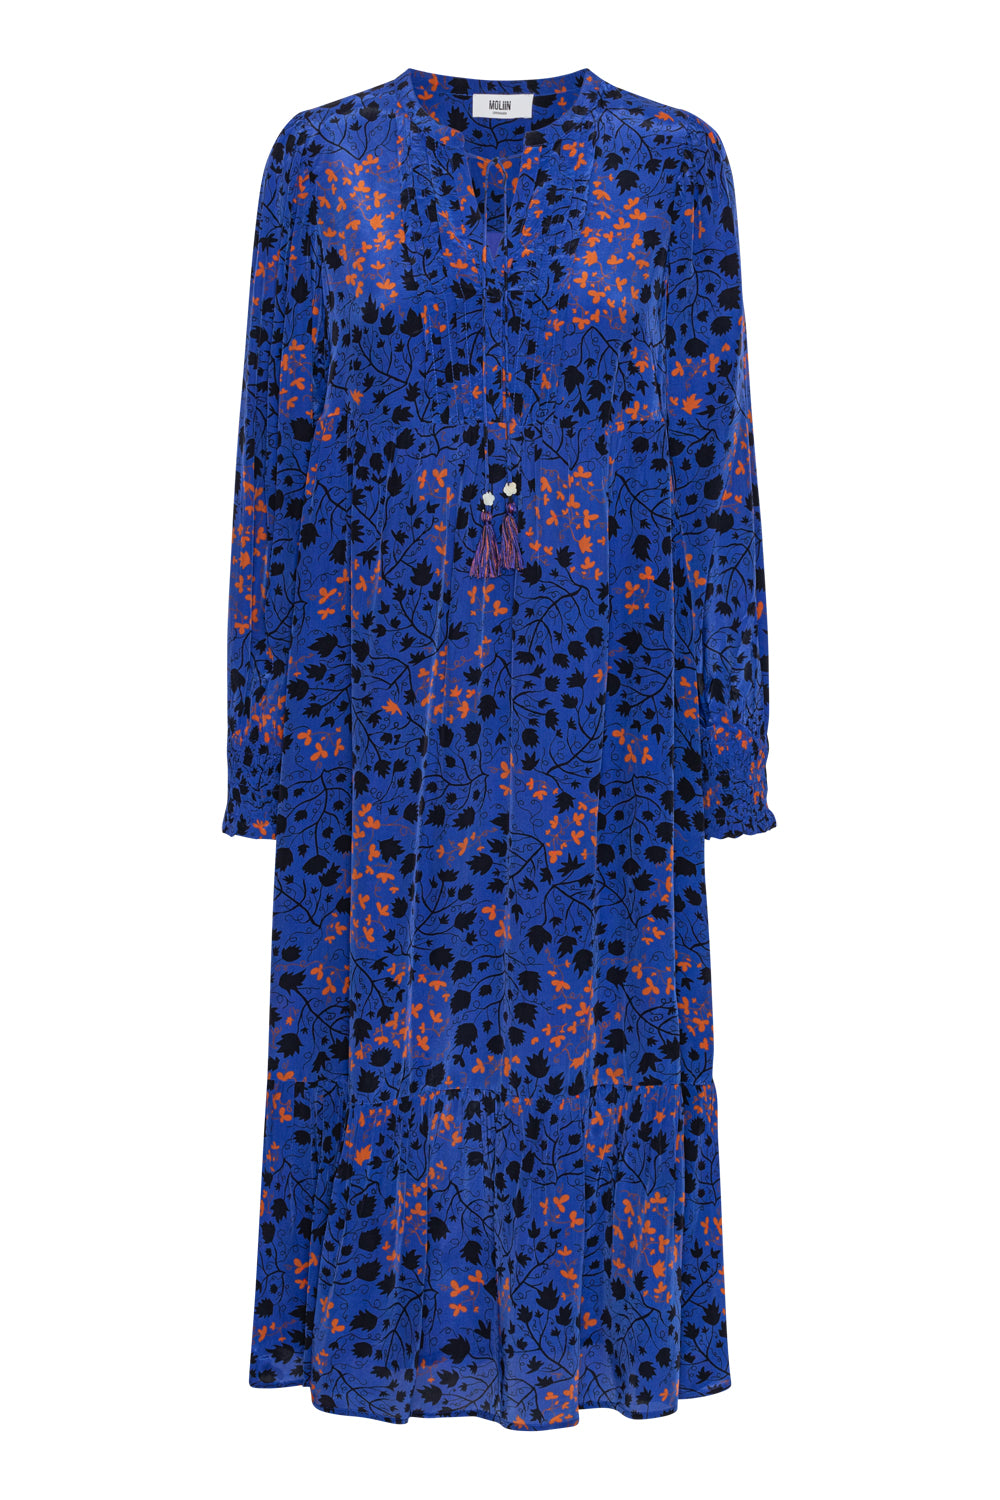 Moliin Poppy Dress - Clematis Blue